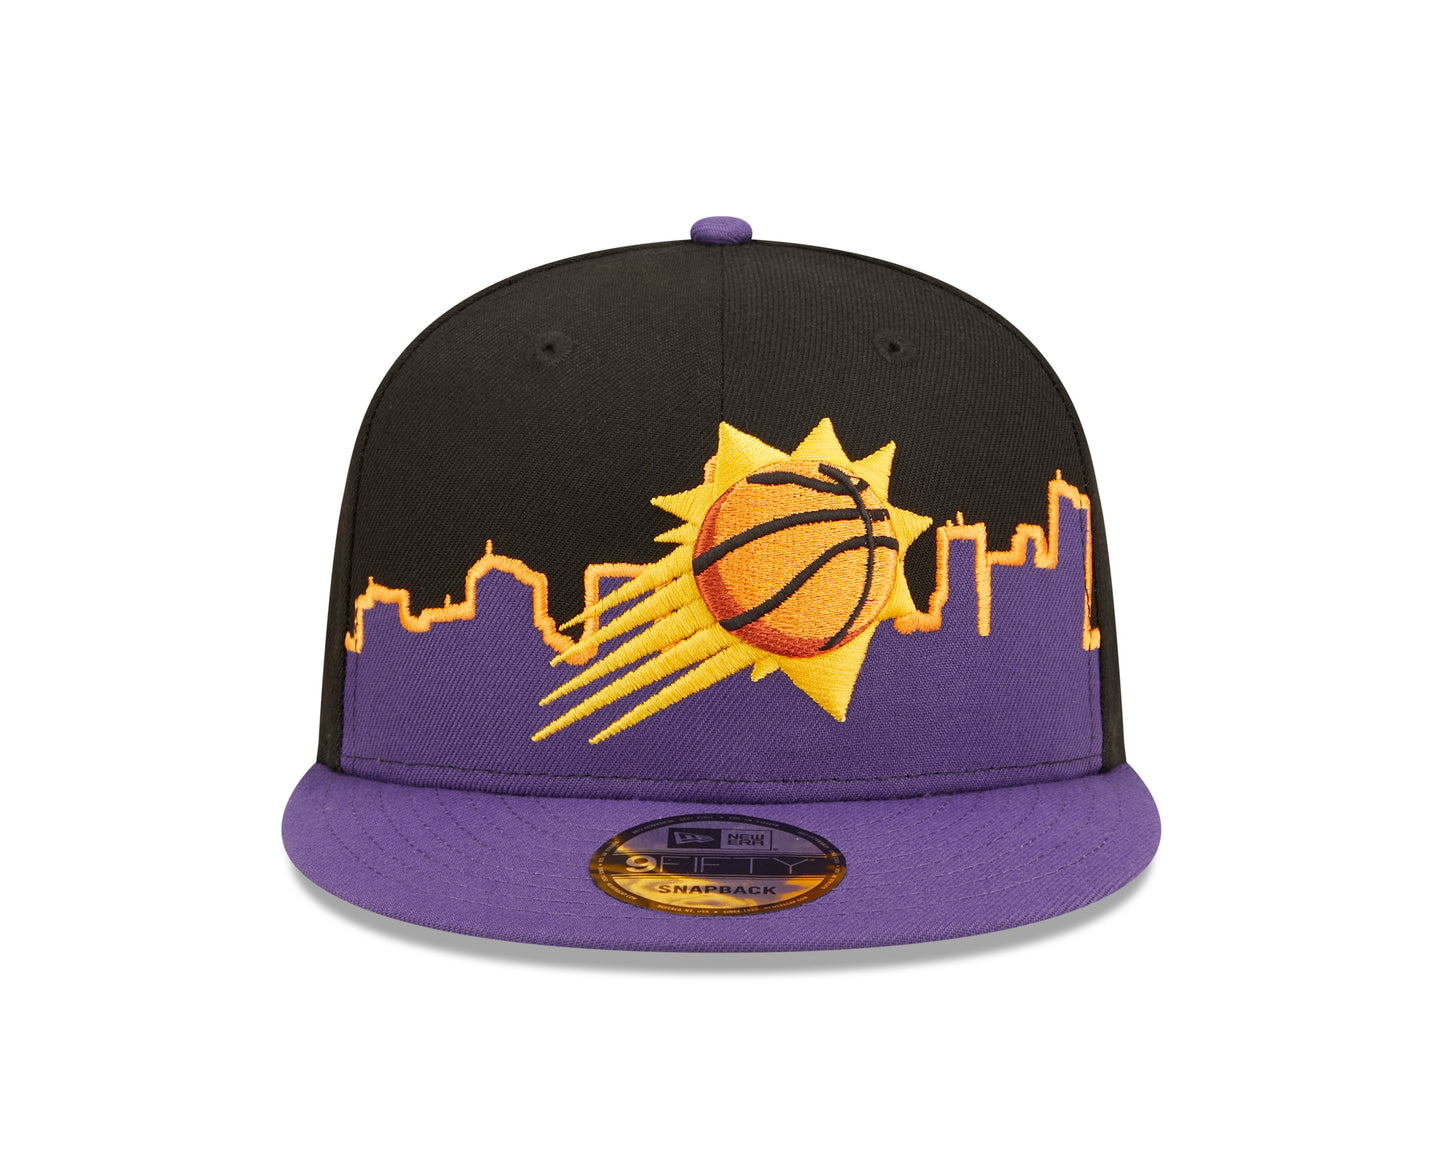 Phoenix Suns New Era Tip-Off 9FIFTY Snap Back Hat - Purple/Black